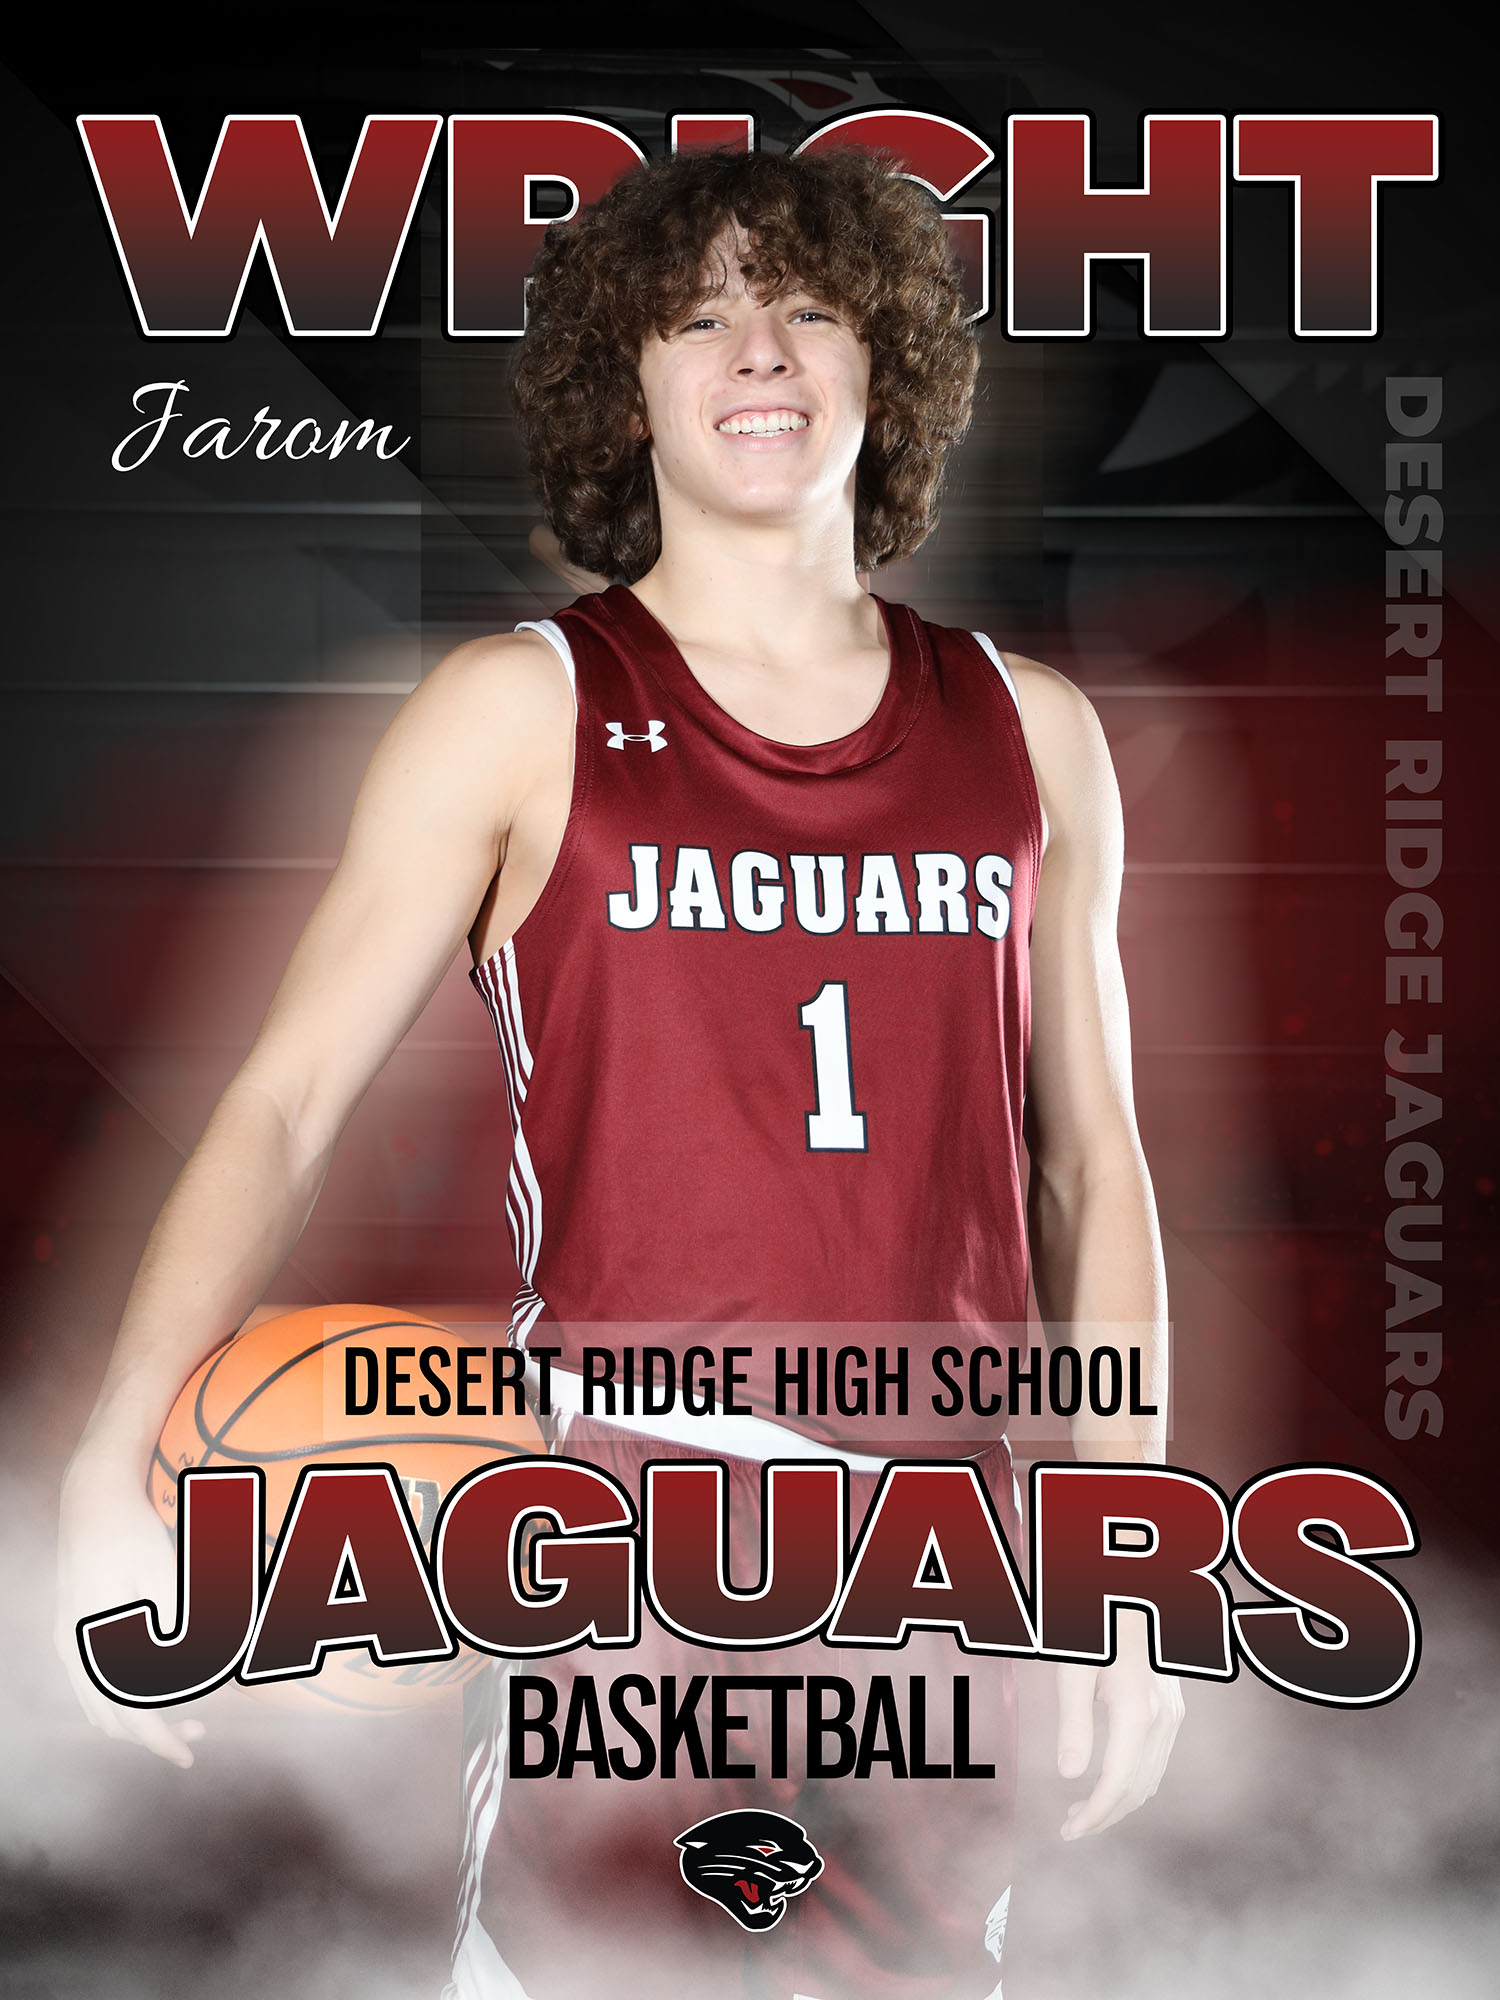 Desert Ridge Jaguars Basketball player Jarom Wright